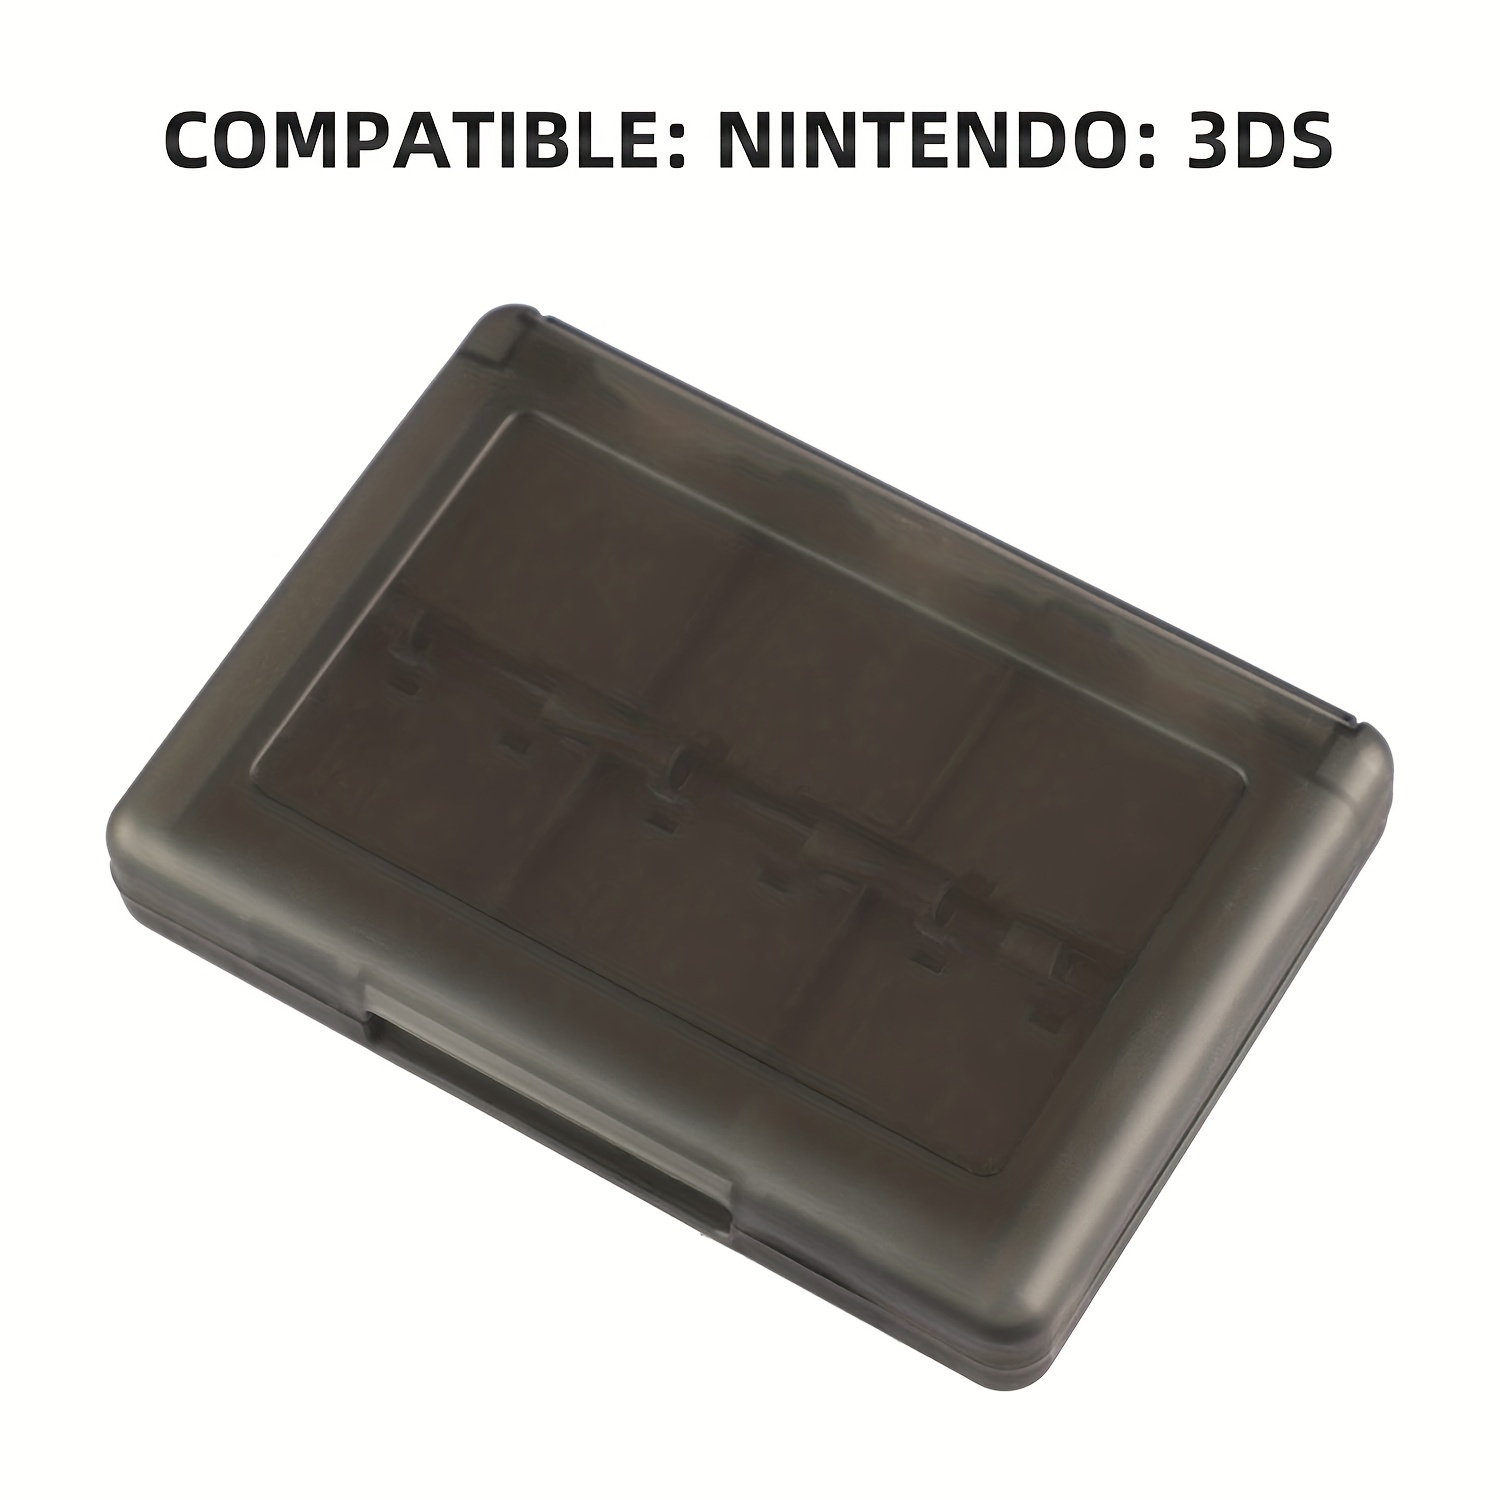  Game Traveler Nintendo 3DS or 2DS Case - Compatible